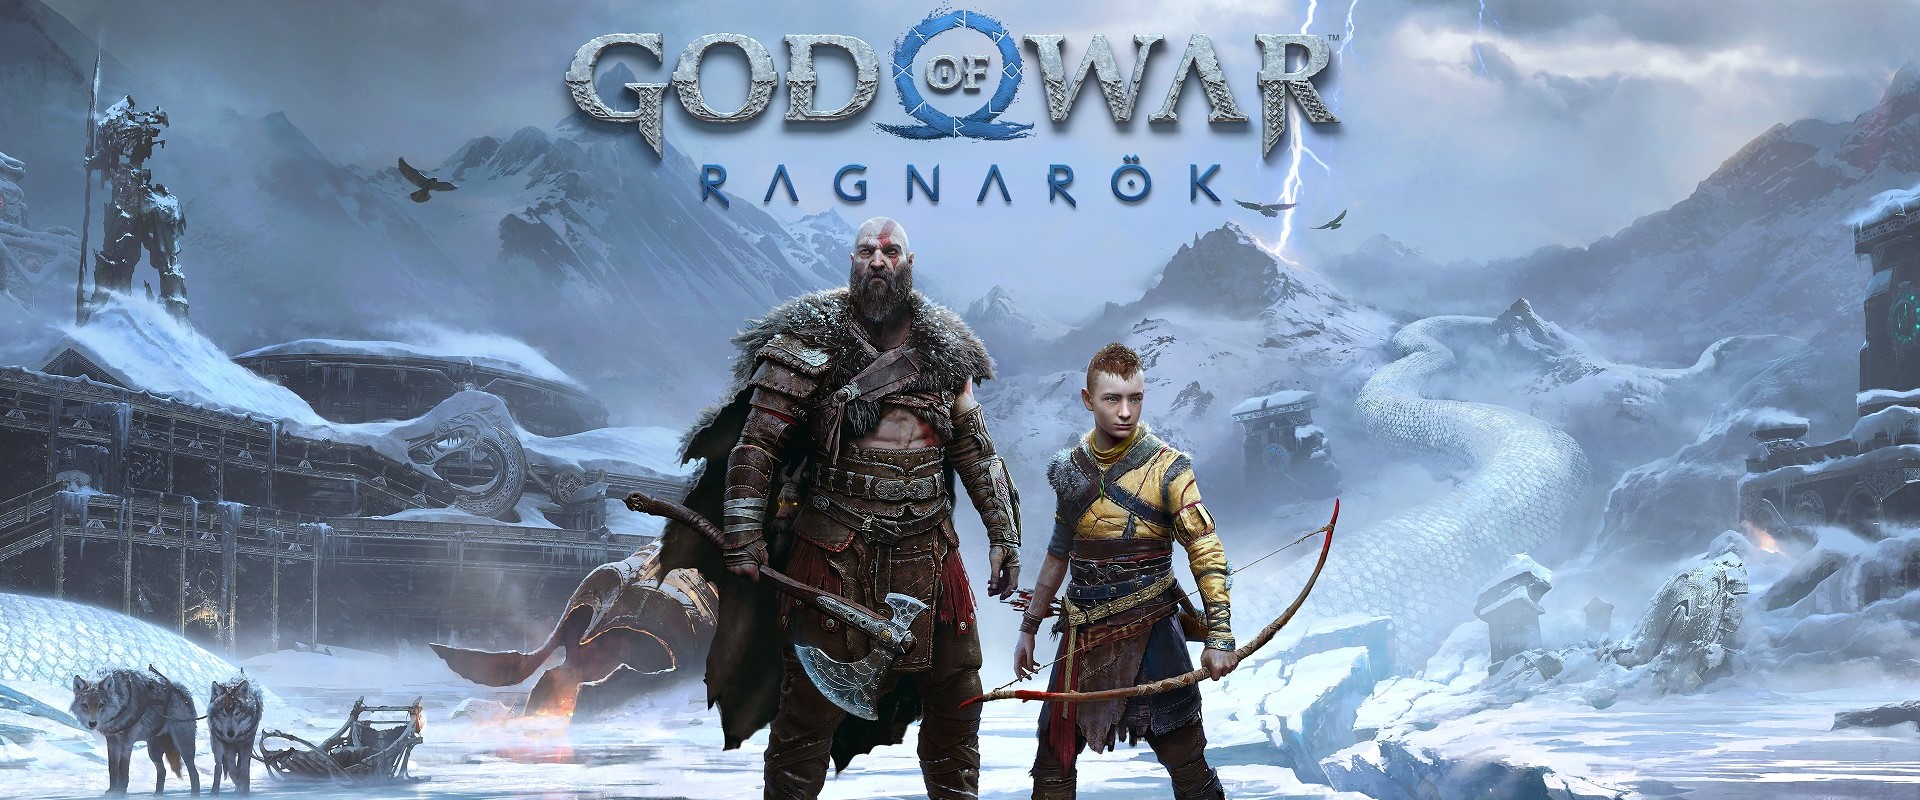 Insane progress: blogger compares PC version of God of War 2018 on Ultra  settings and God of War Ragnarok on PlayStation 5